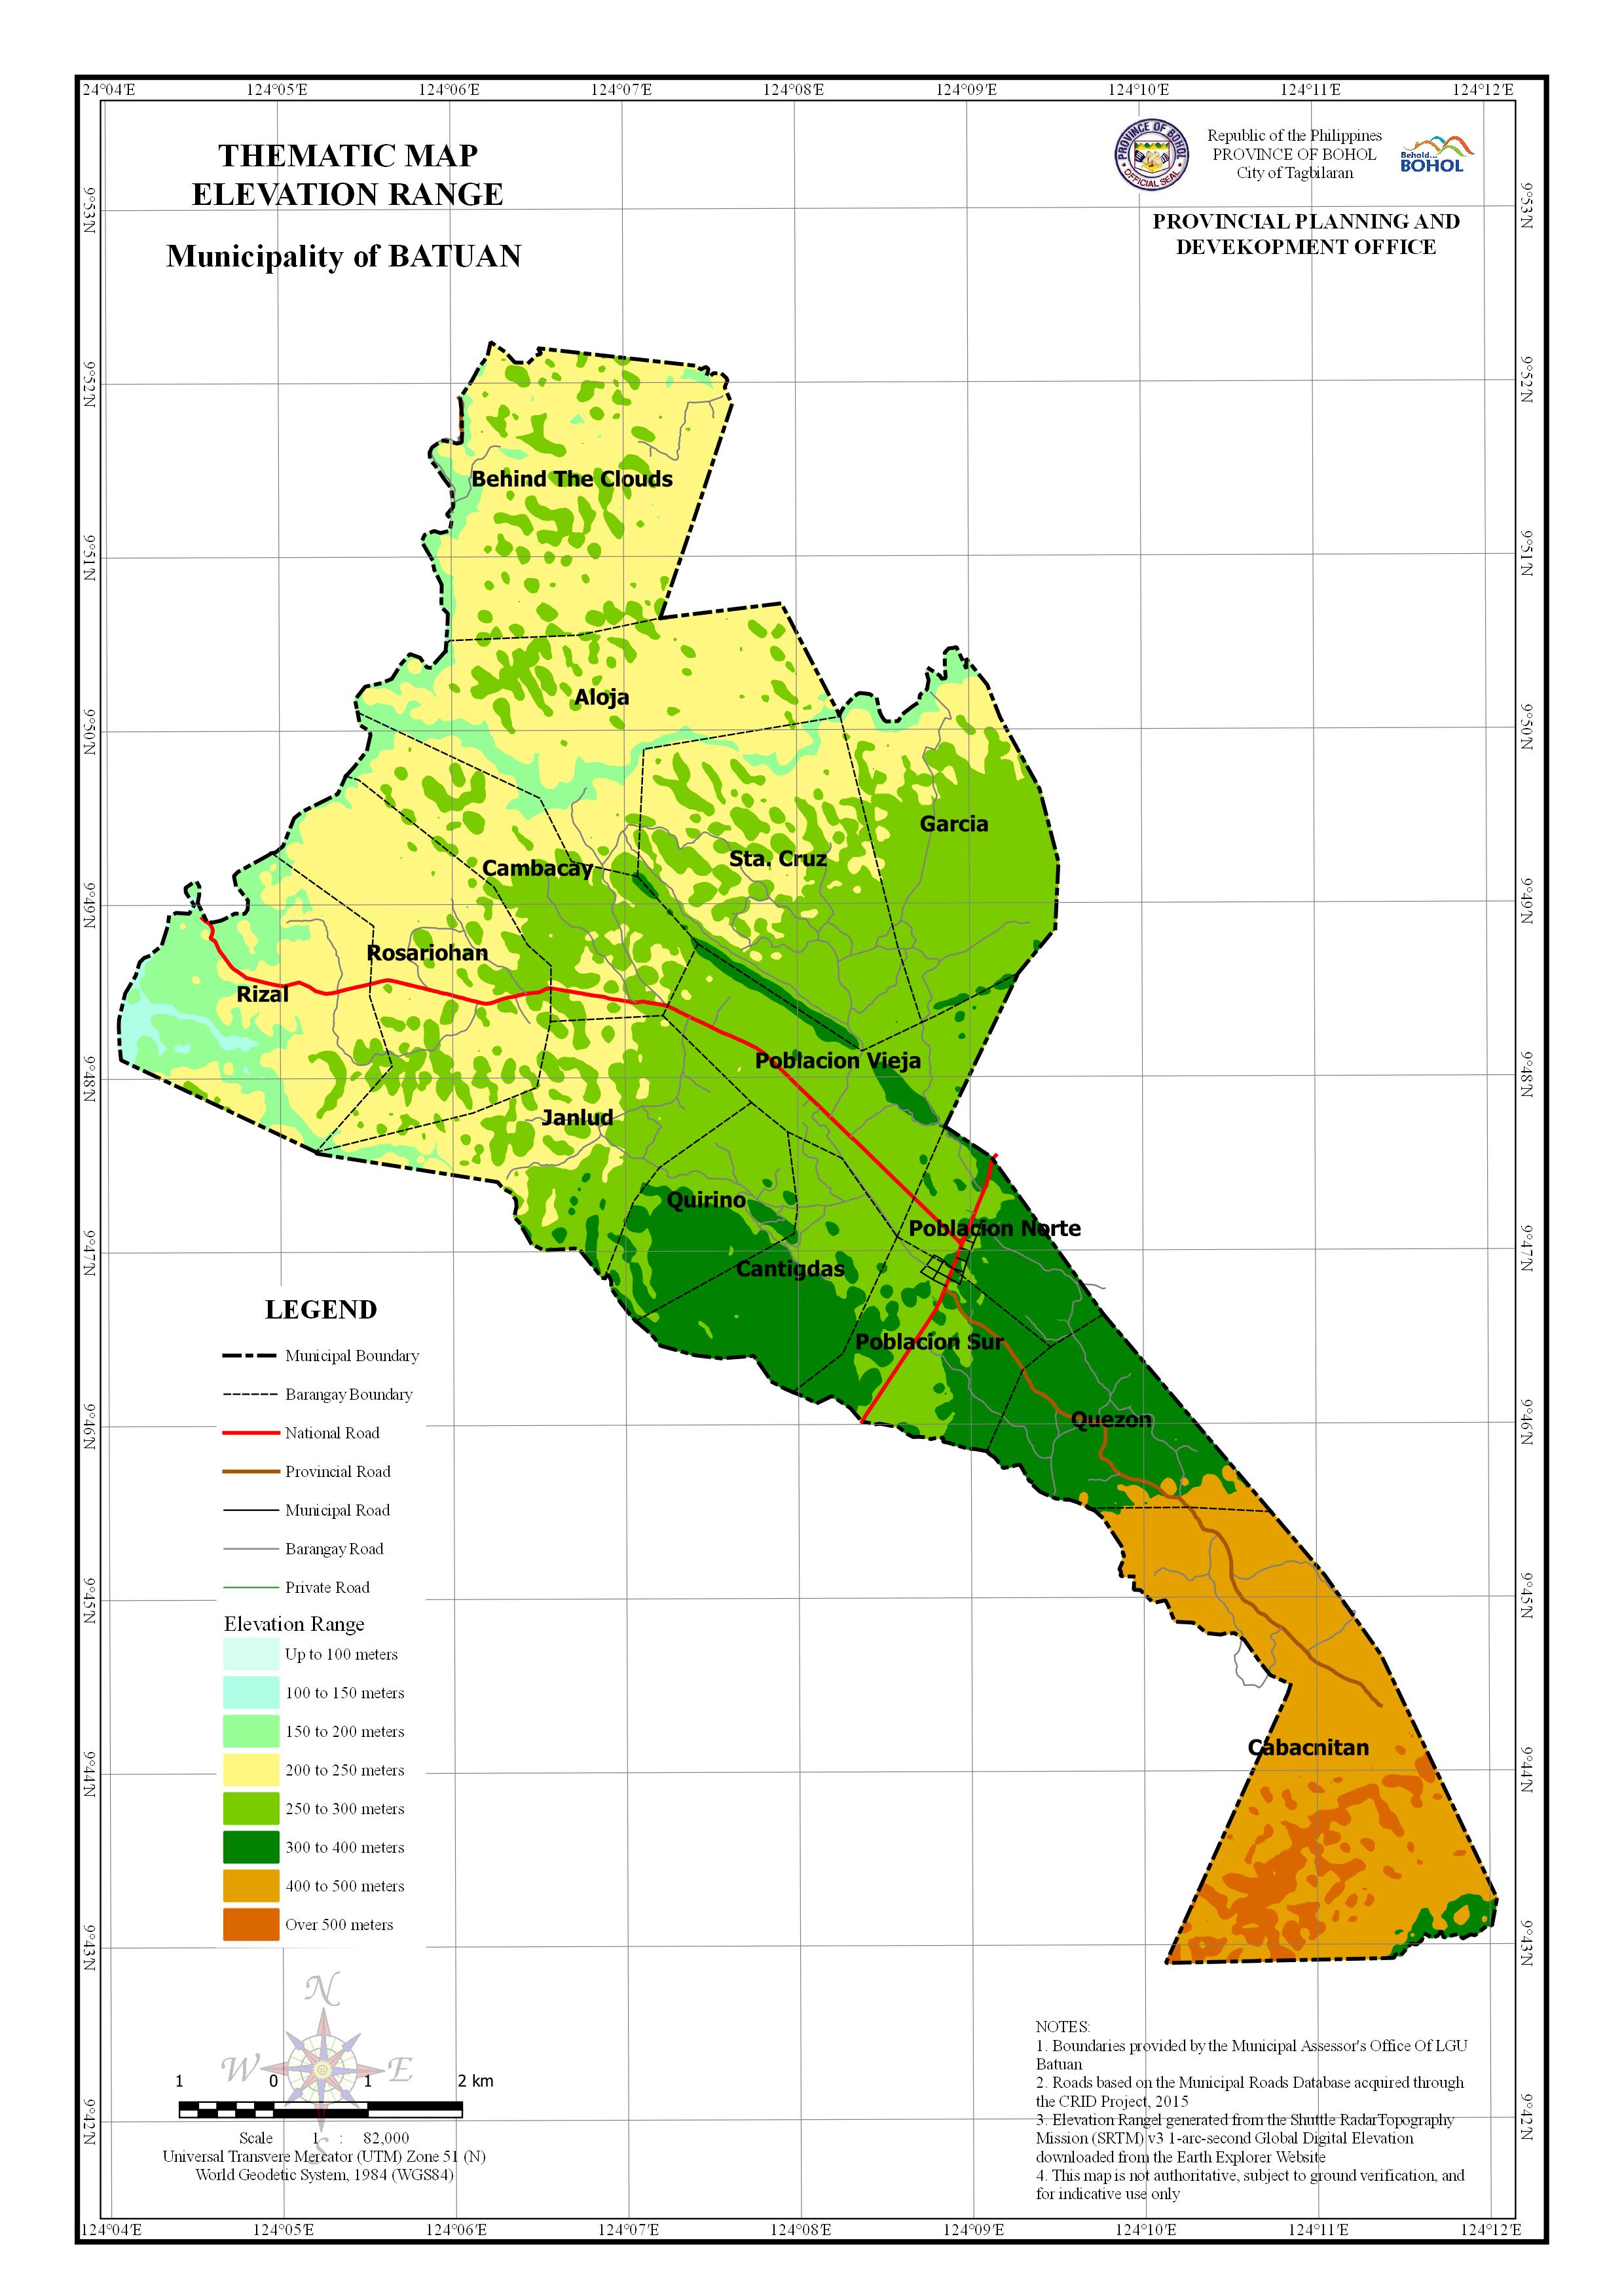 Elevation Range of the Municipality of Batuan